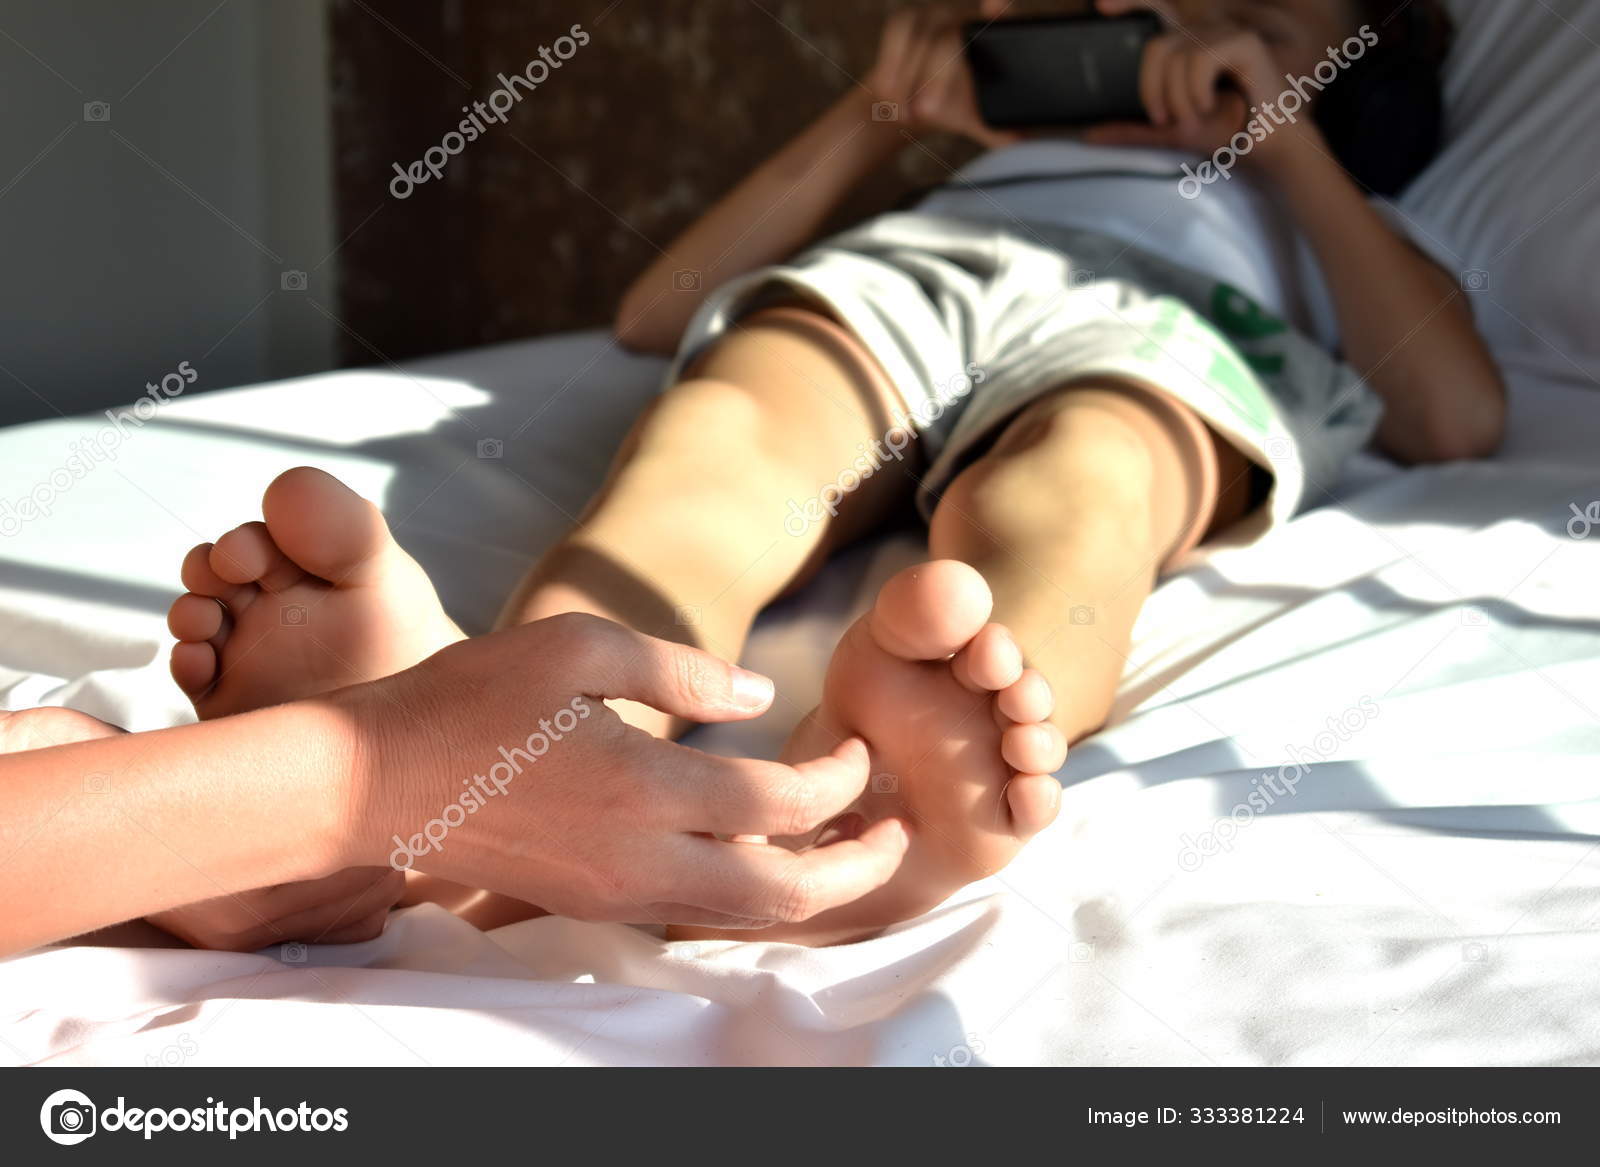 Foot feet boy tickle. Щекотать ребенка. Щекотка детей. Щекотка ног. Щекотка ног детей.